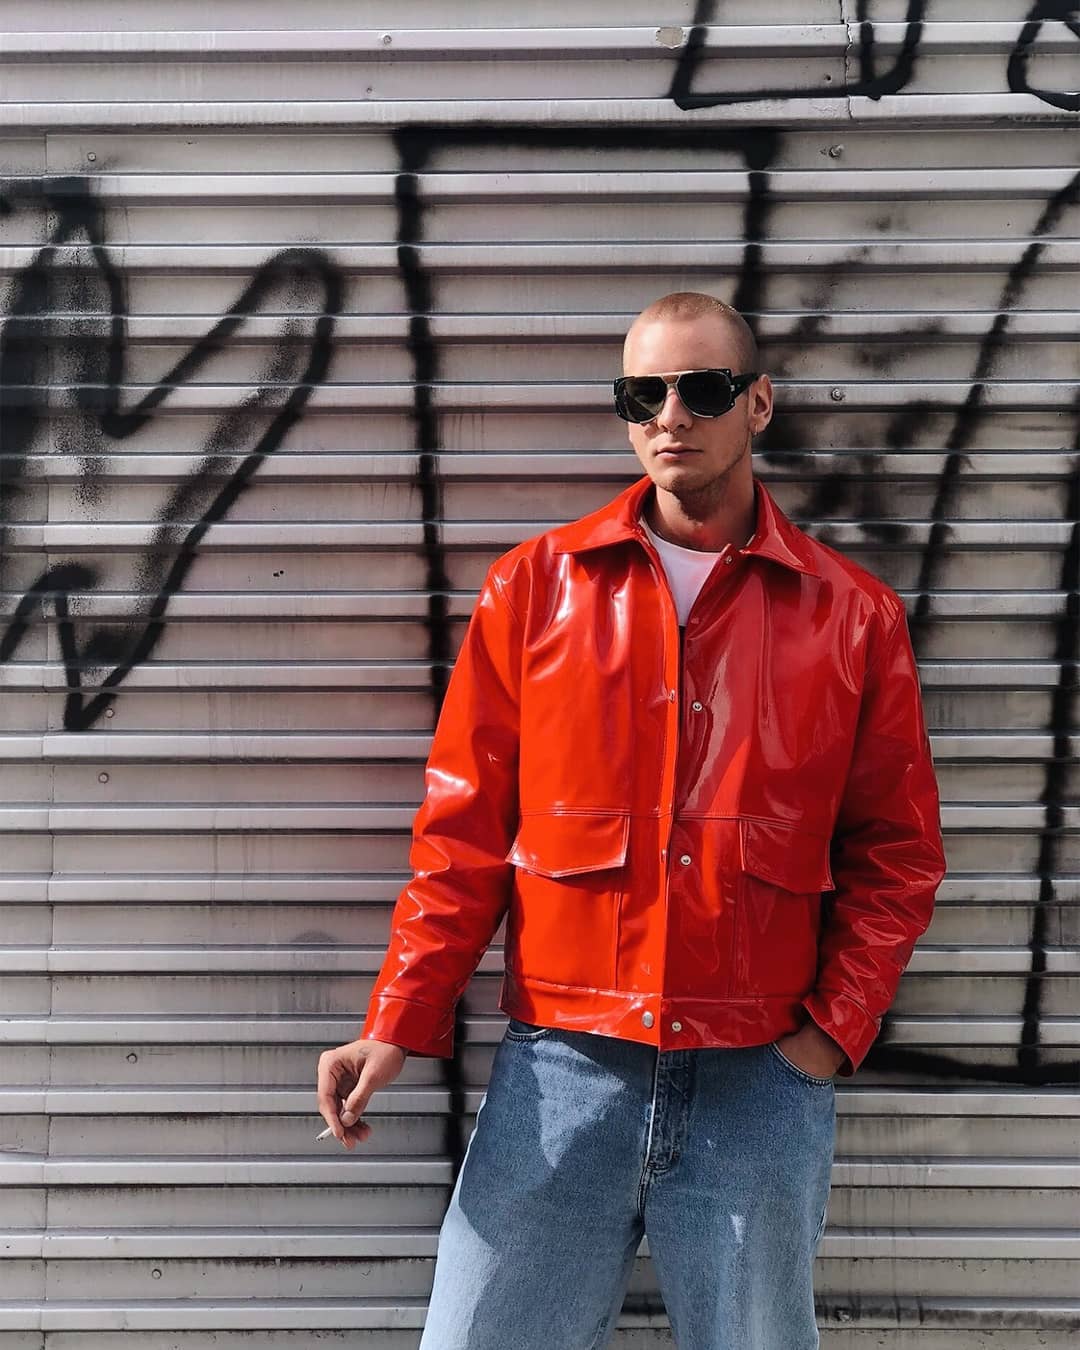 Ivan kašša vinyl pvc red jacket influencer Streetstyle streetwear upcycling fashion label brand local designer Berlin